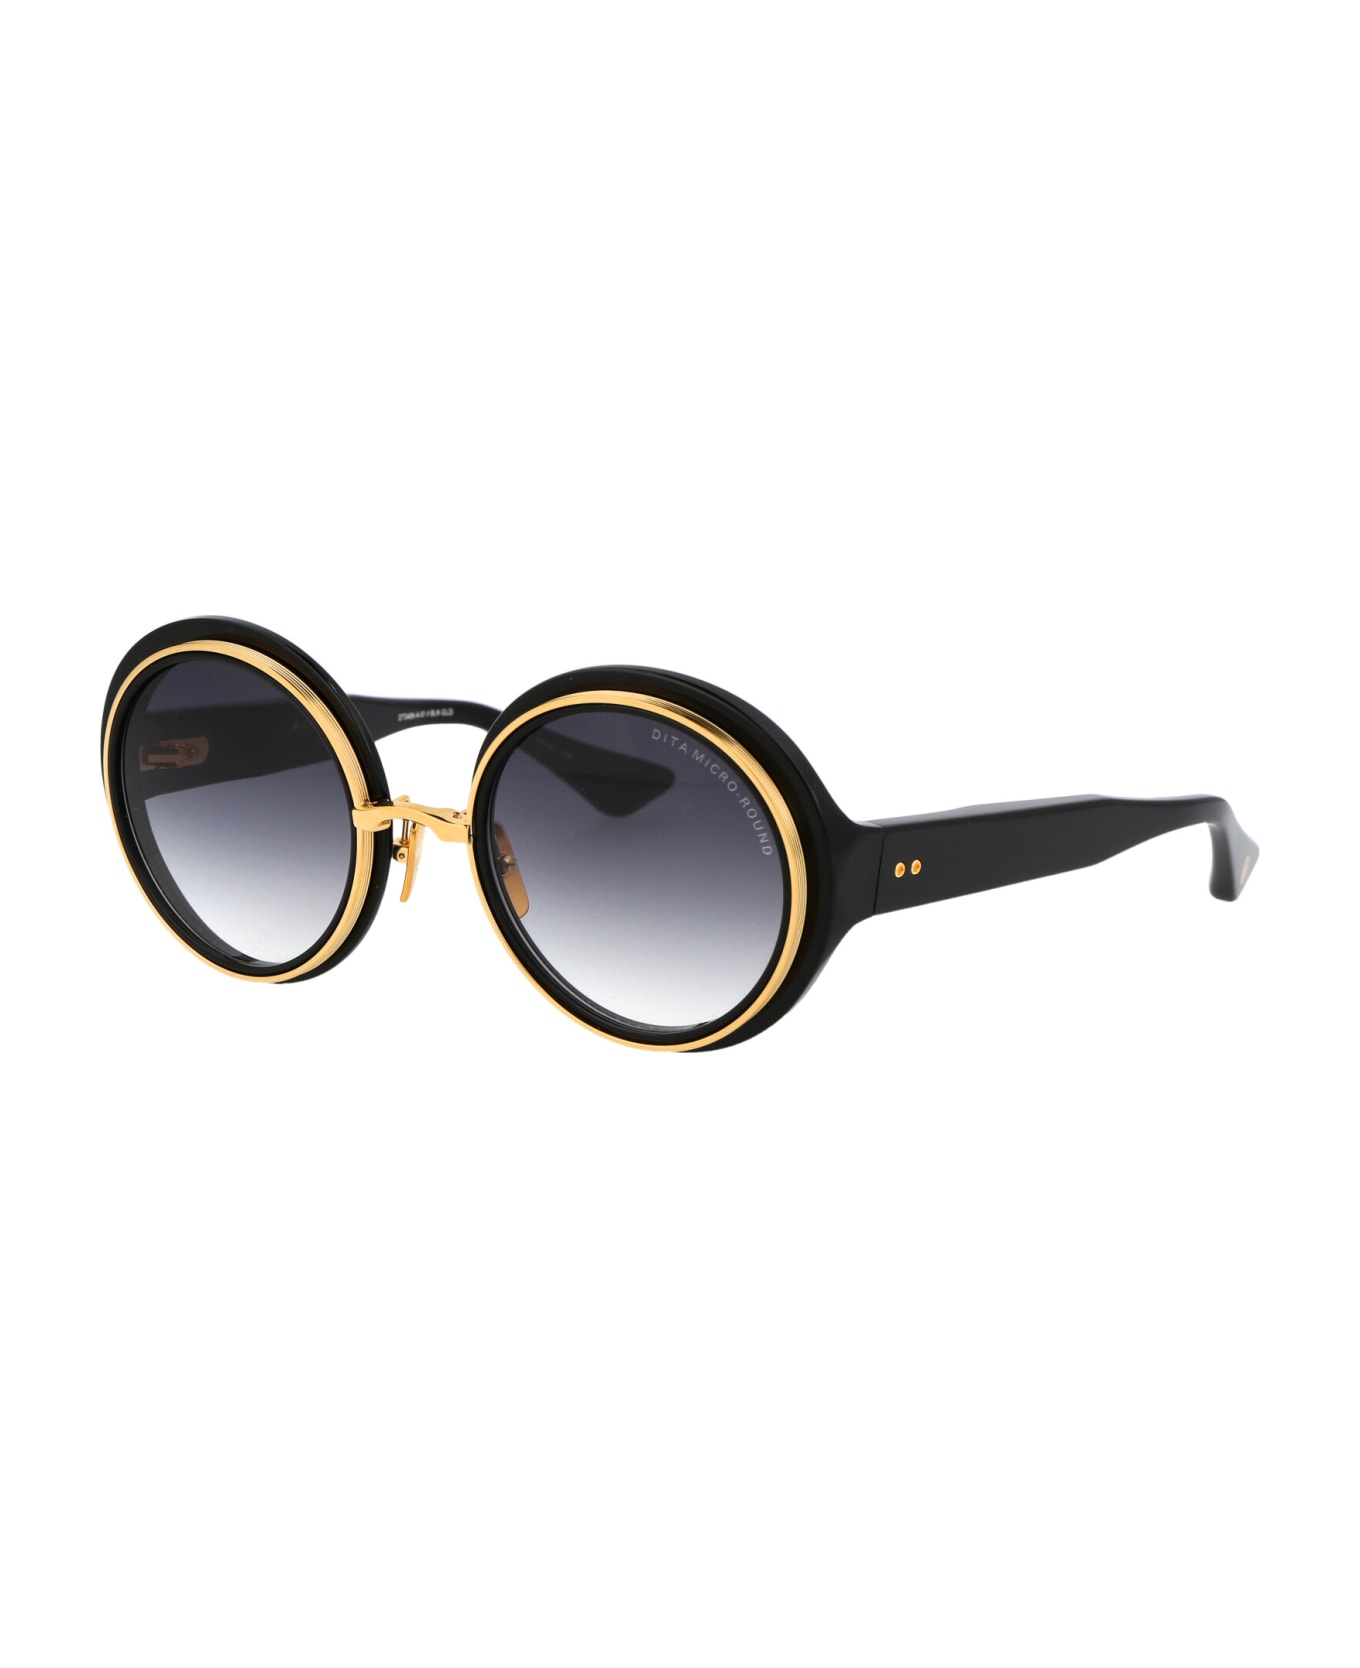 Dita Micro-round Sunglasses - 01 BLACK - YELLOW GOLD W/ DARK GREY TO CLEAR GRADIENT